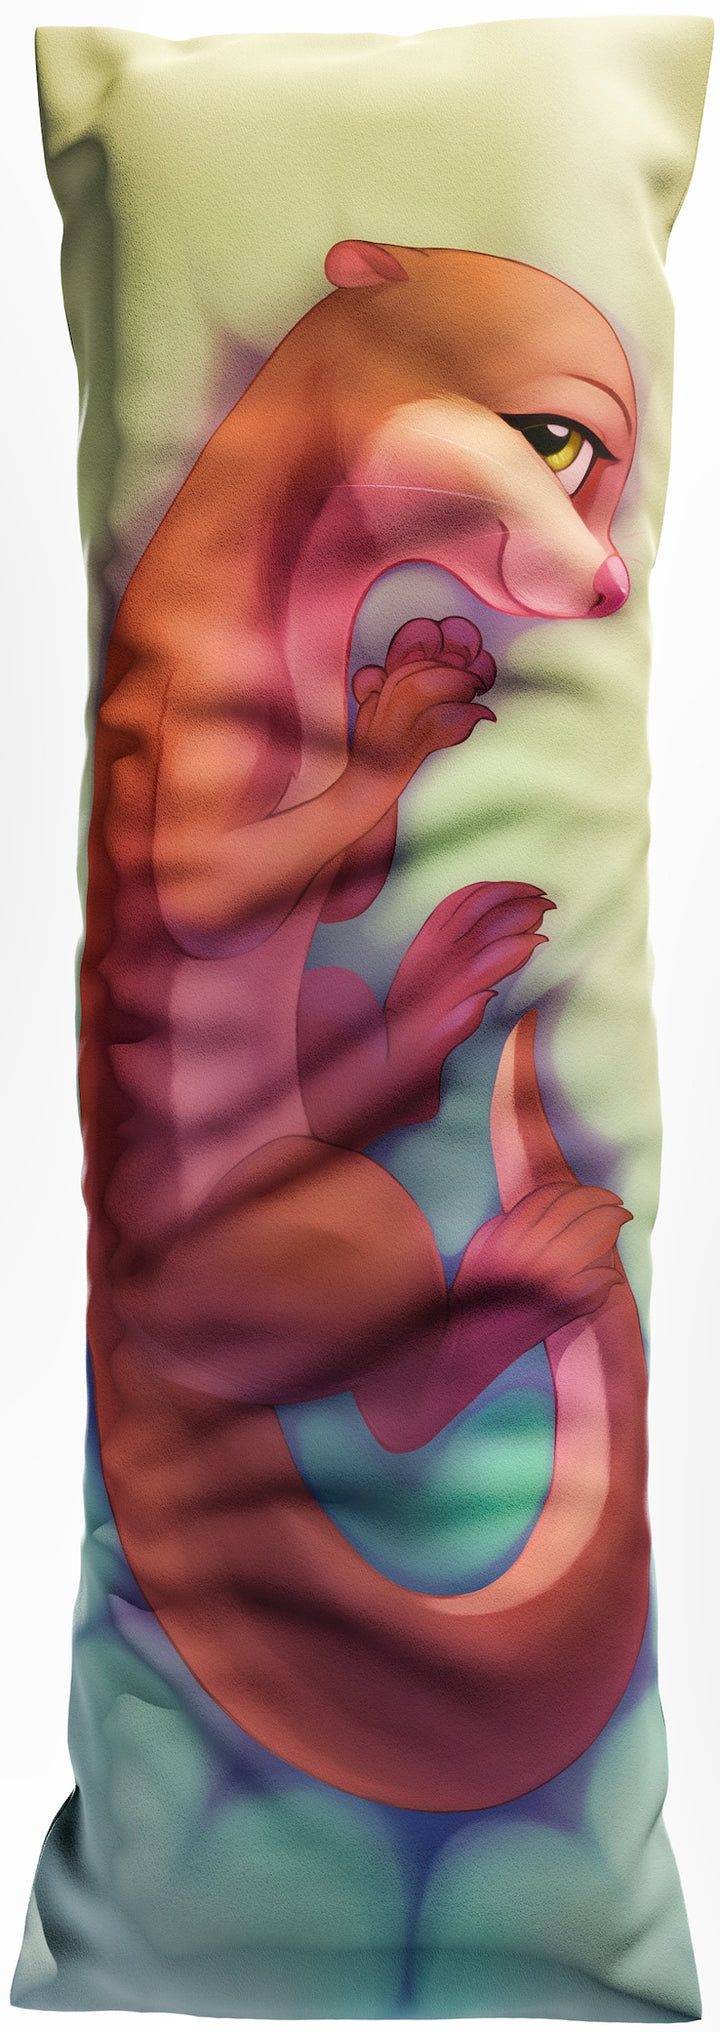 Daki - Art by Taneysha -  Kelpily the Otter cute anthro Otter girl Dakimakura sea creature Furry Body Pillow Cover